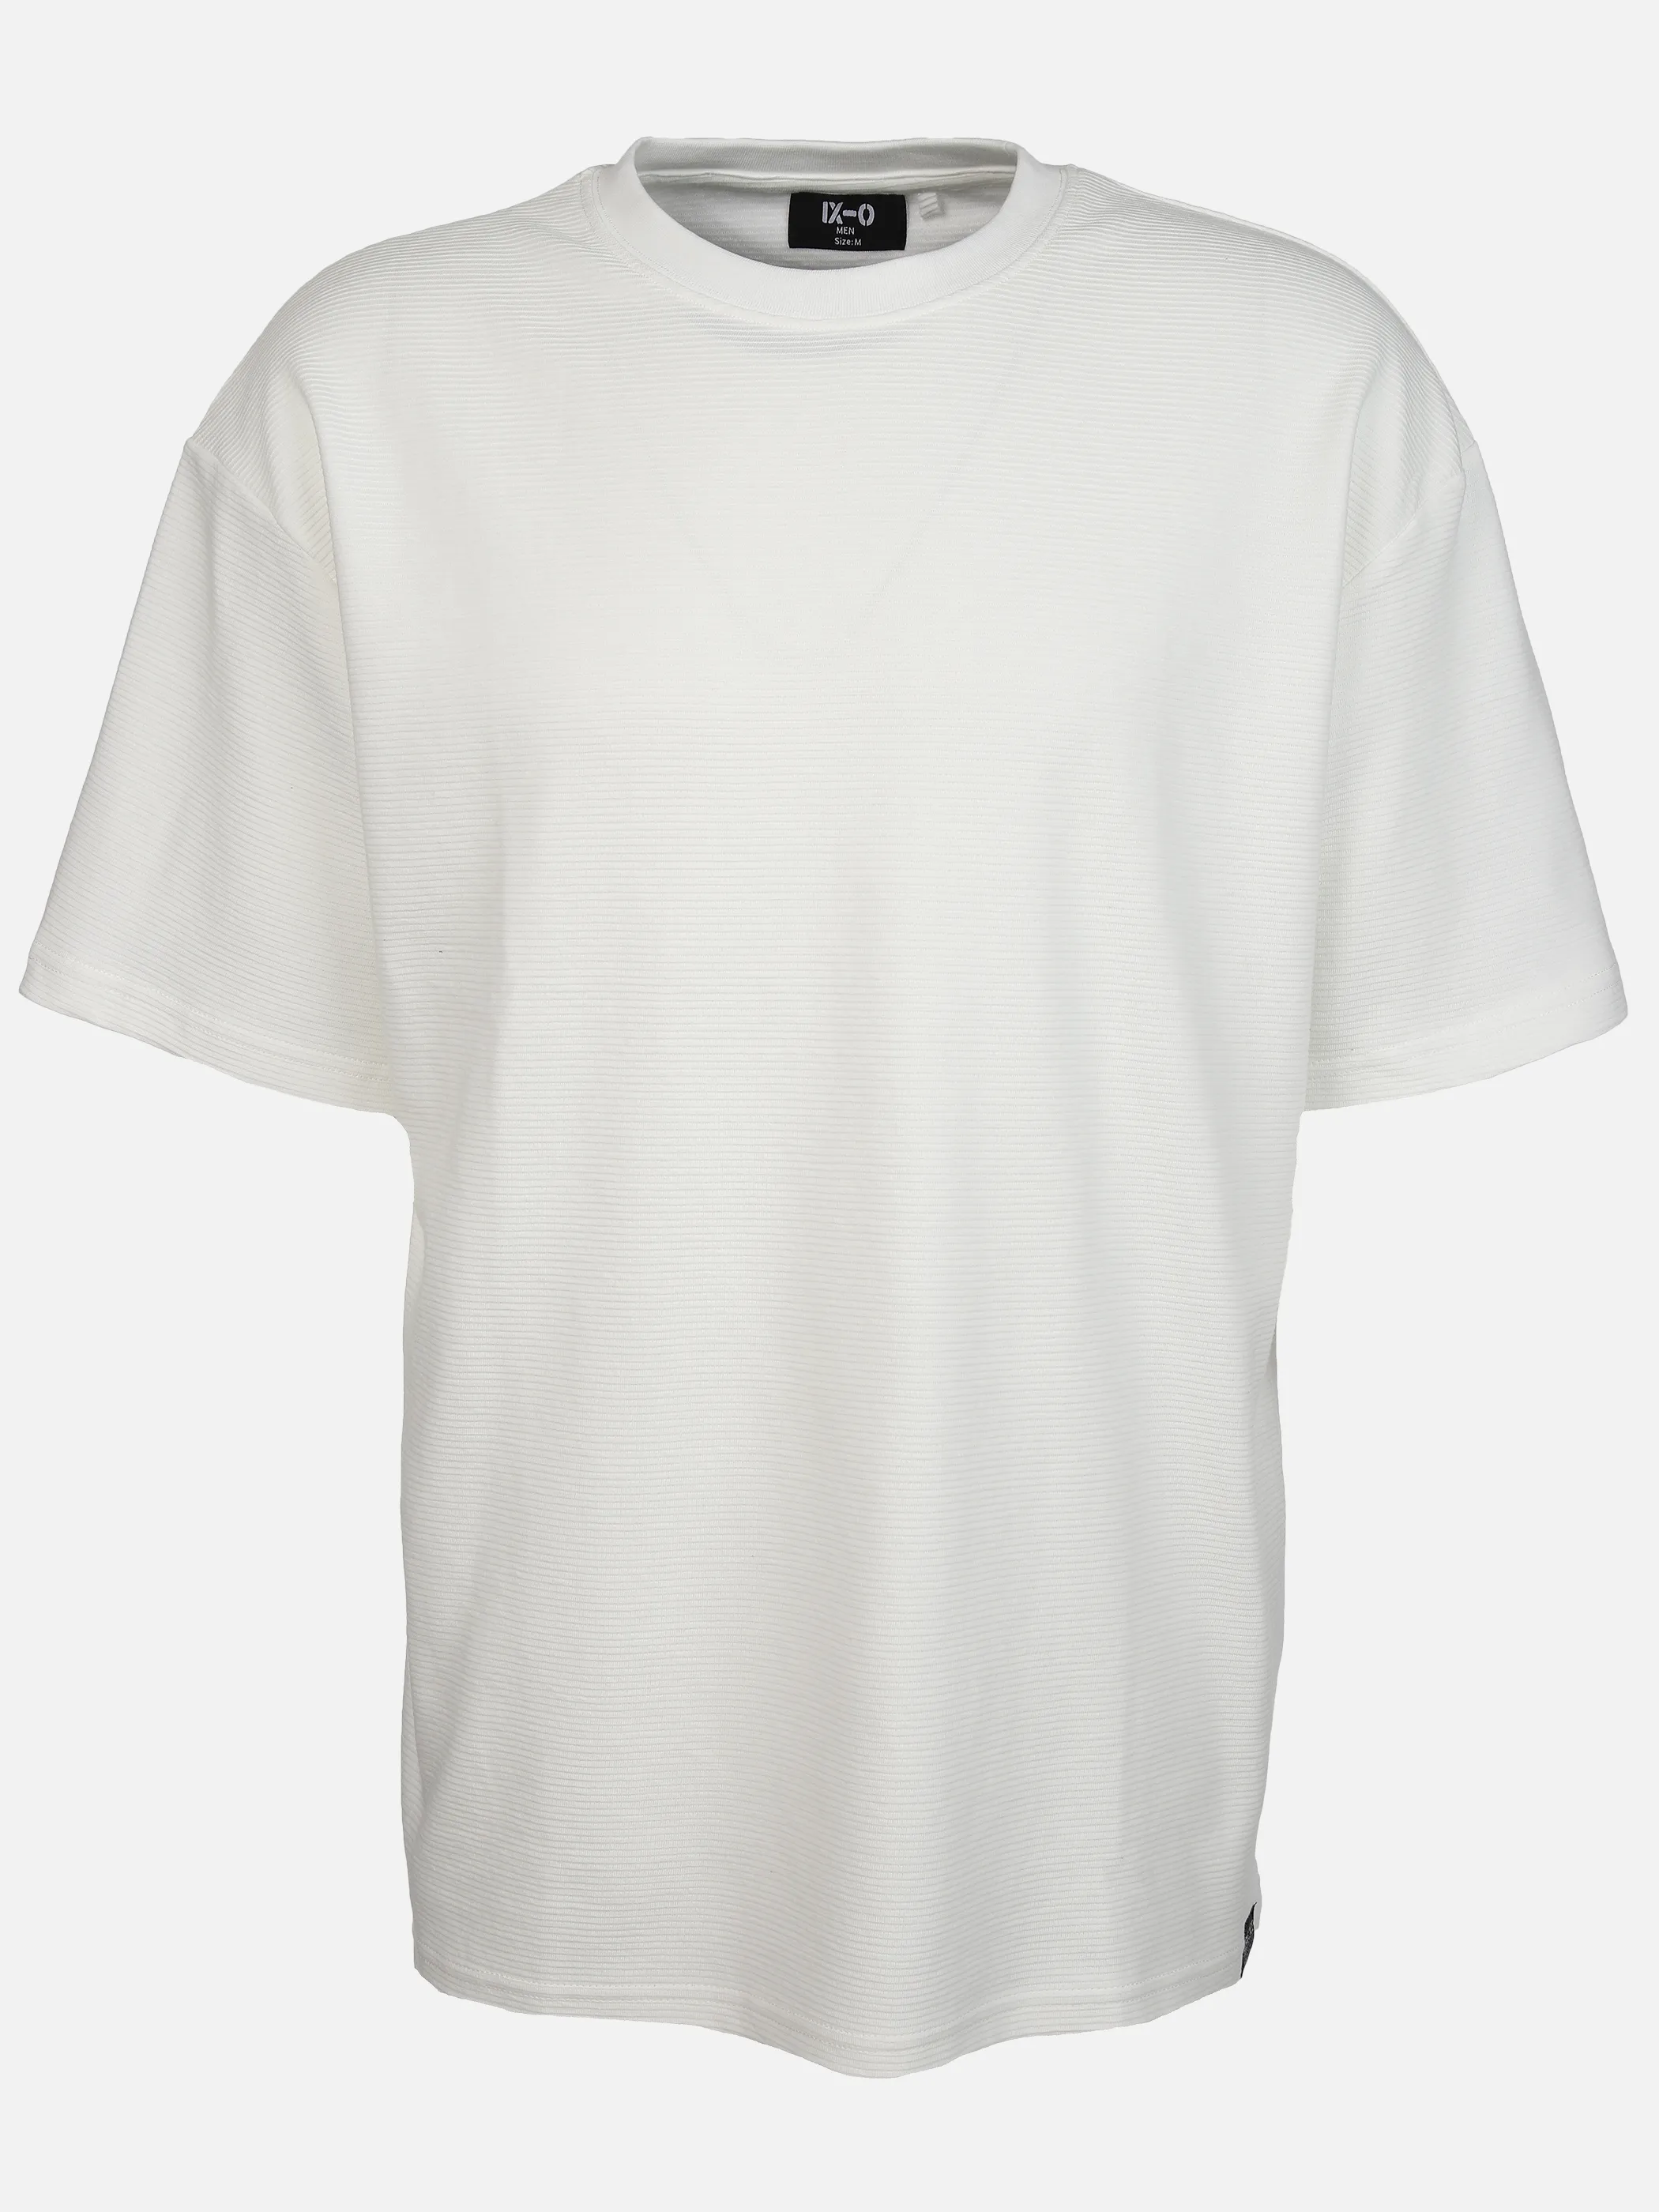 IX-O YF-He- T-Shirt Relaxed Fit Weiß 891819 OFFWHITE 1